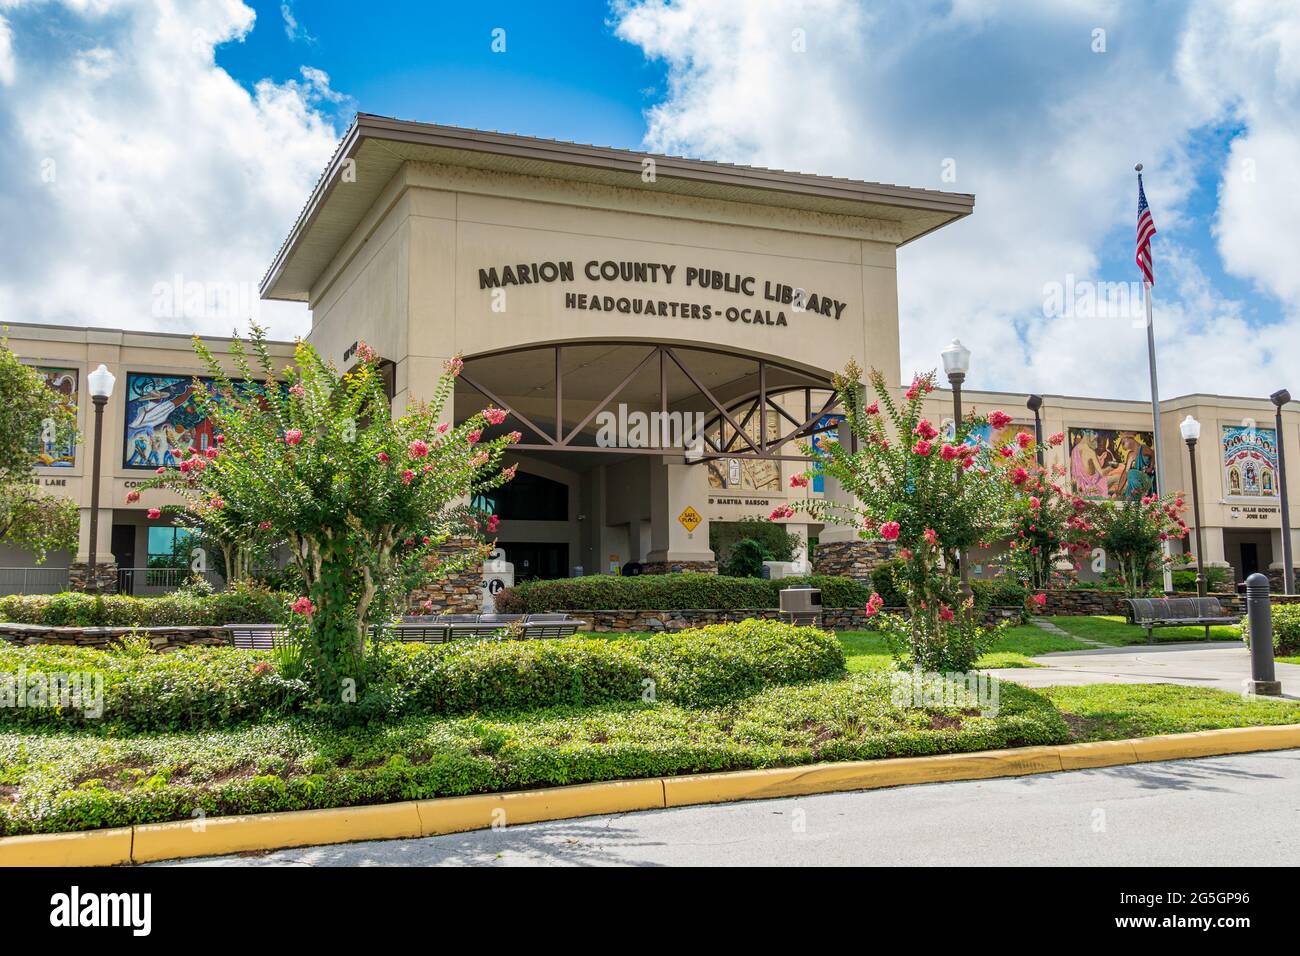 Marion County Public Library Headquarters - Ocala Gebäude - Ocala, Florida, USA Stockfoto